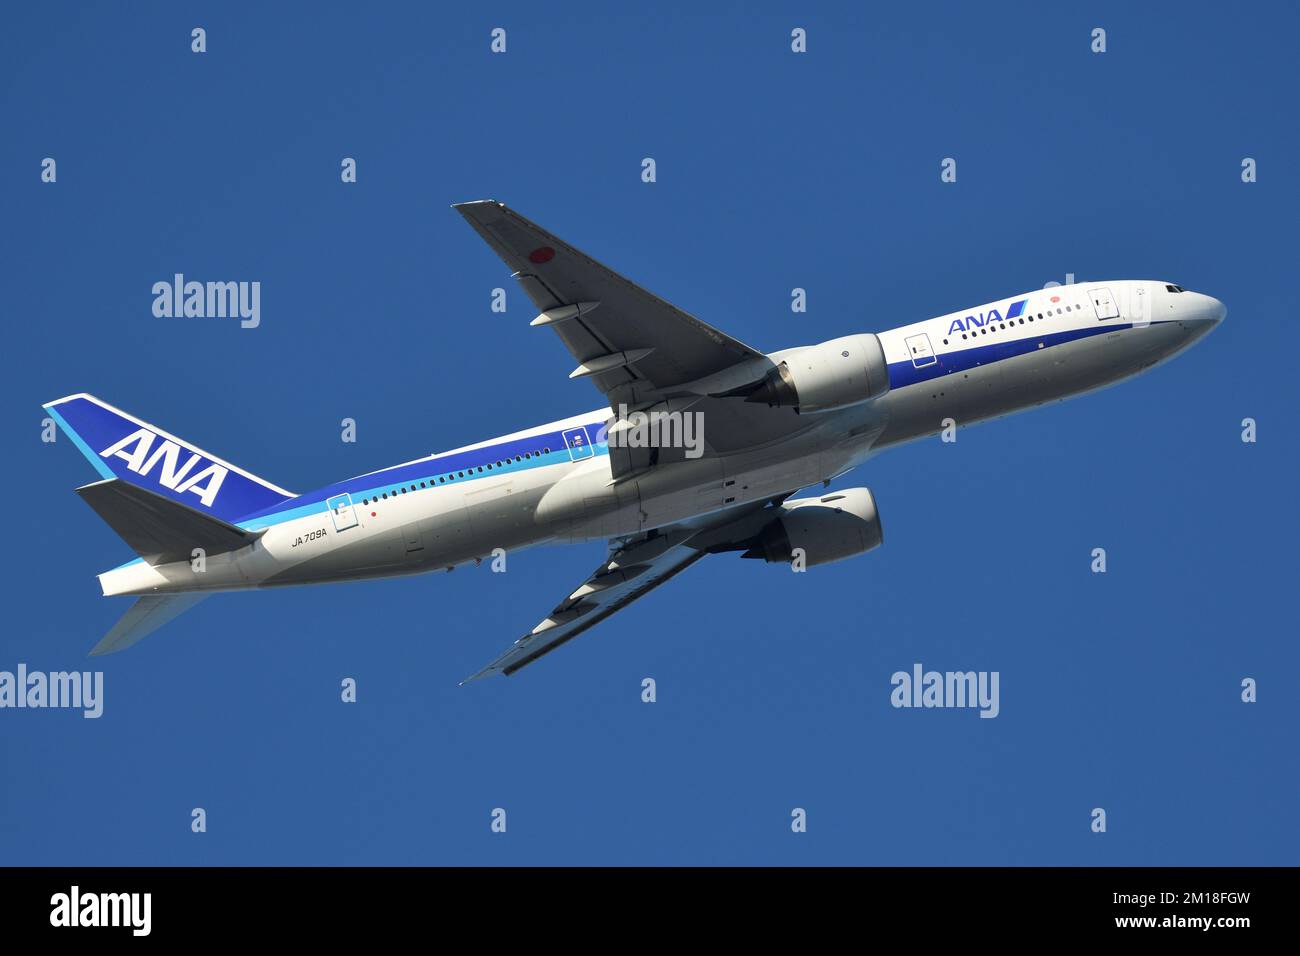 Tokyo, Japan - December 26, 2020: All Nippon Airways (ANA) Boeing B777-200ER (JA709A) passenger plane. Stock Photo